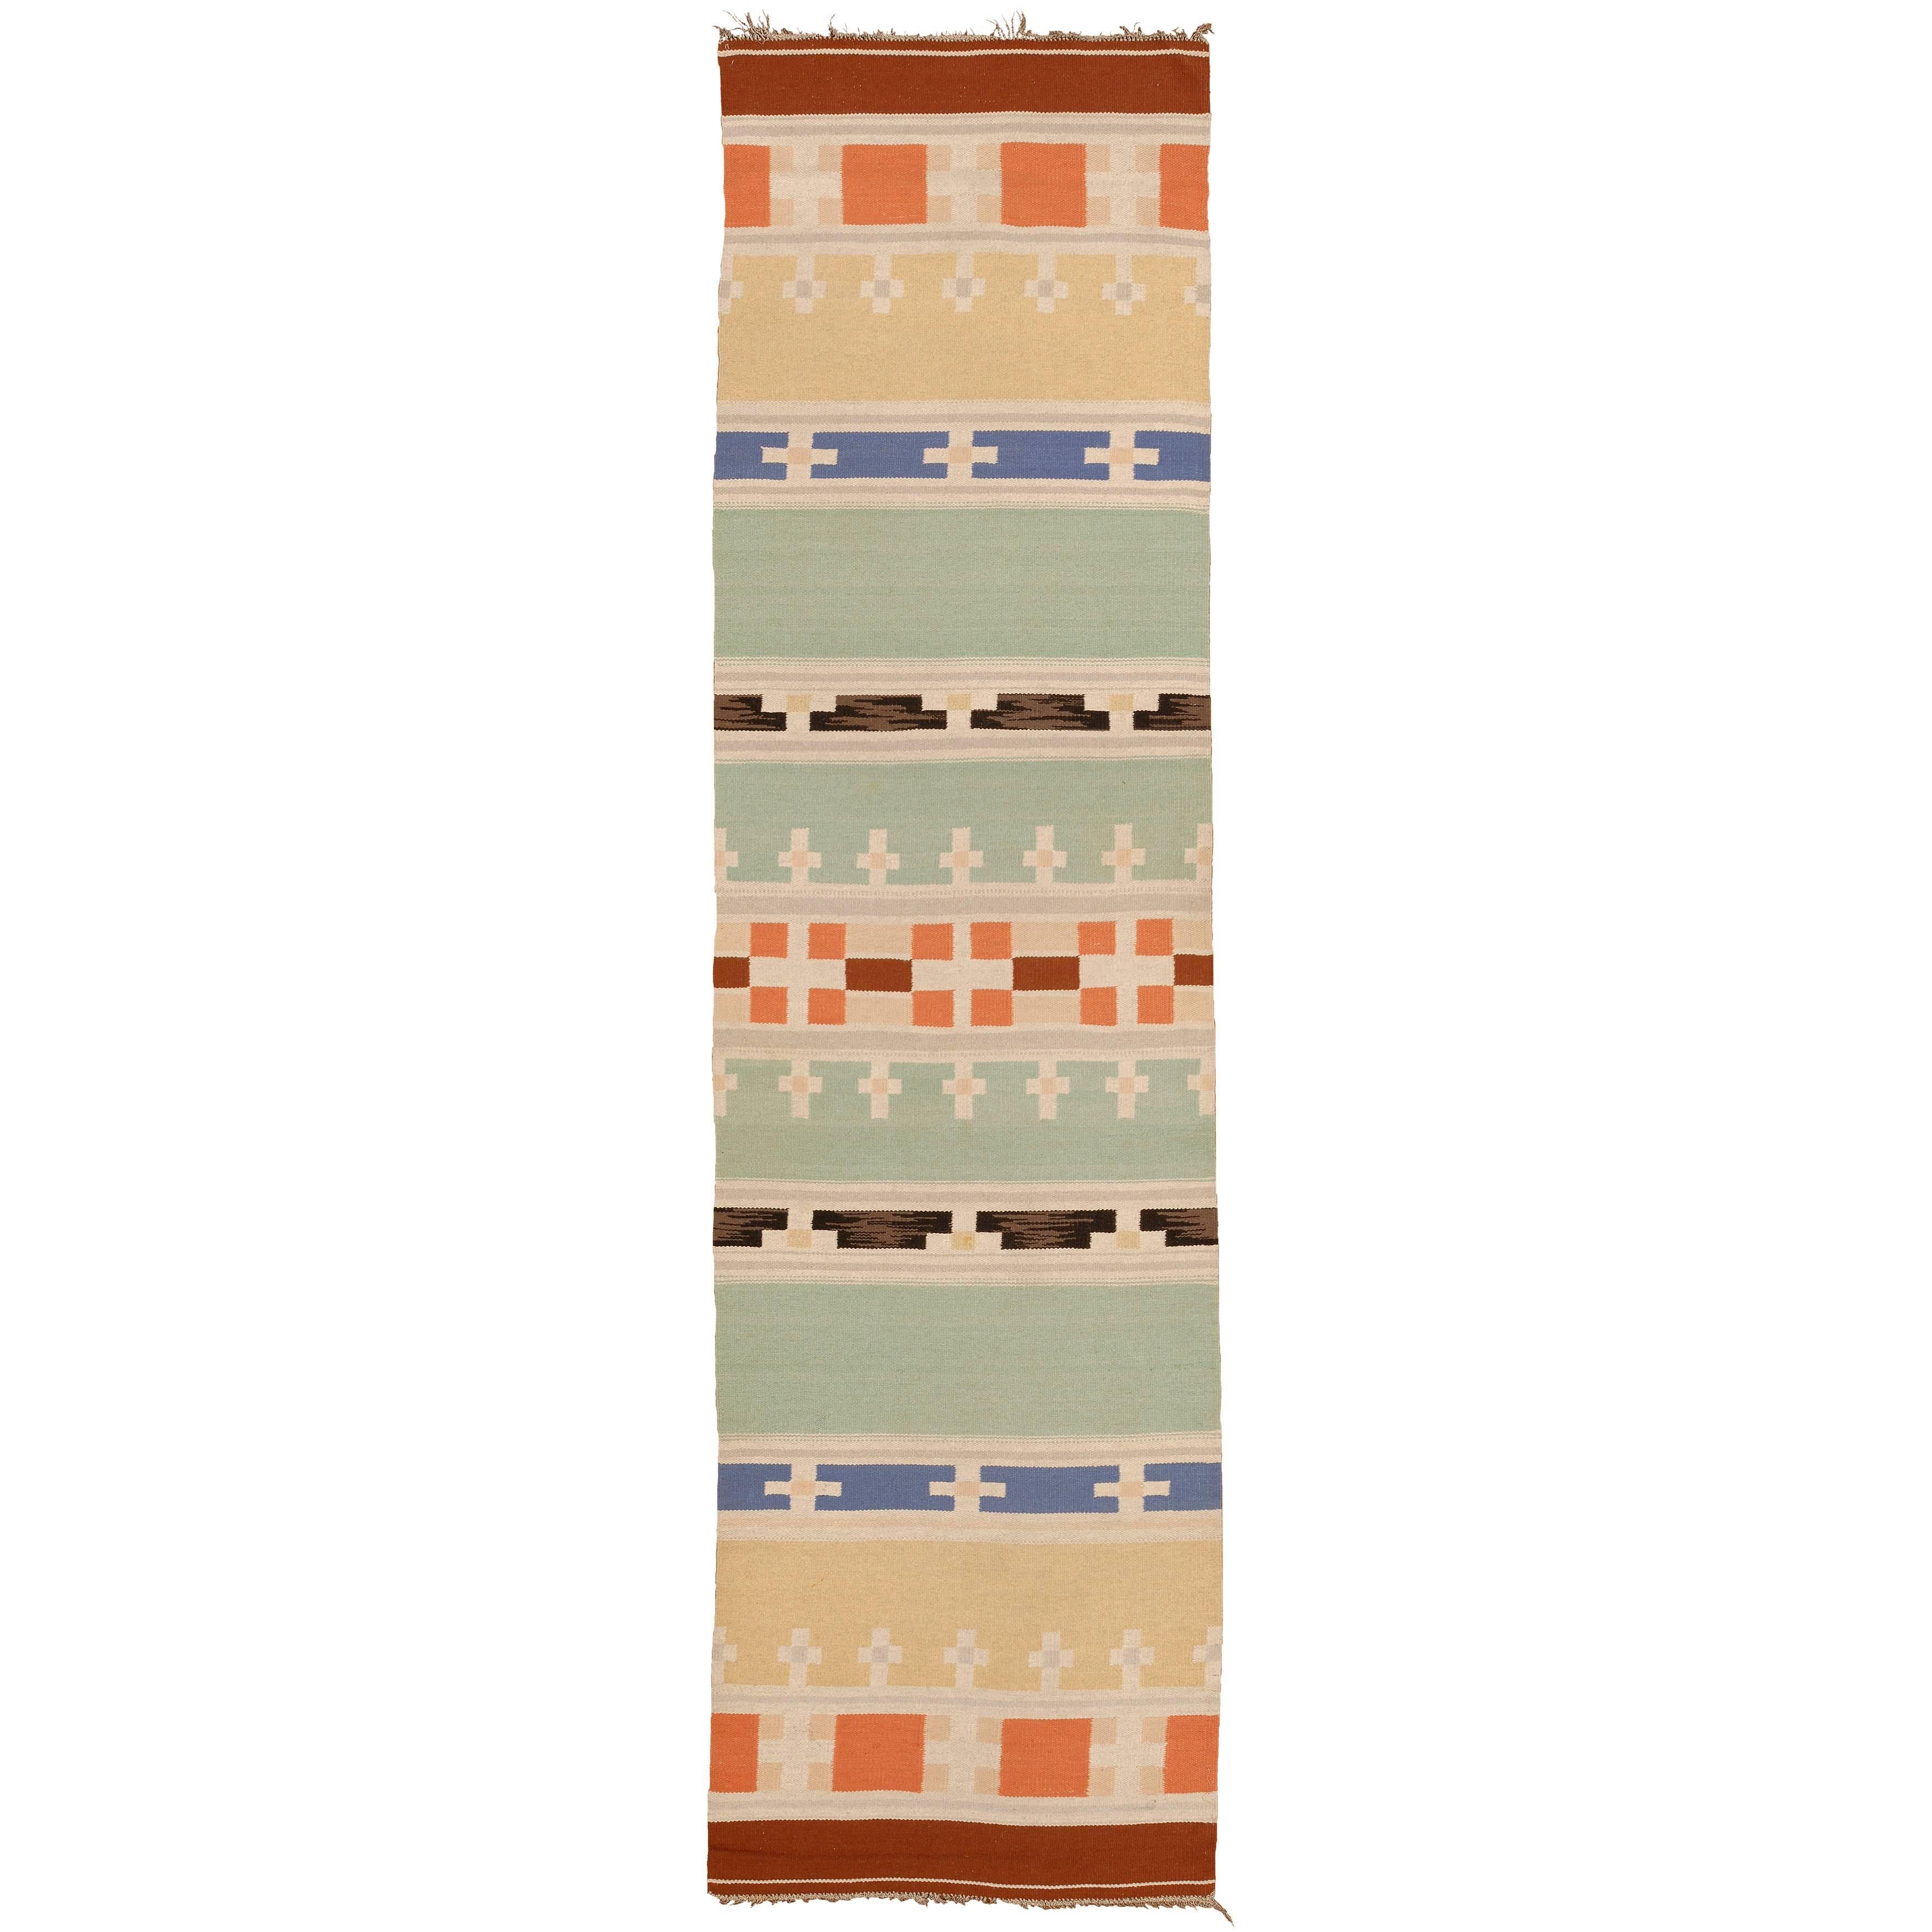 Mid-20th Century Swedish Flat-Weave Carpet